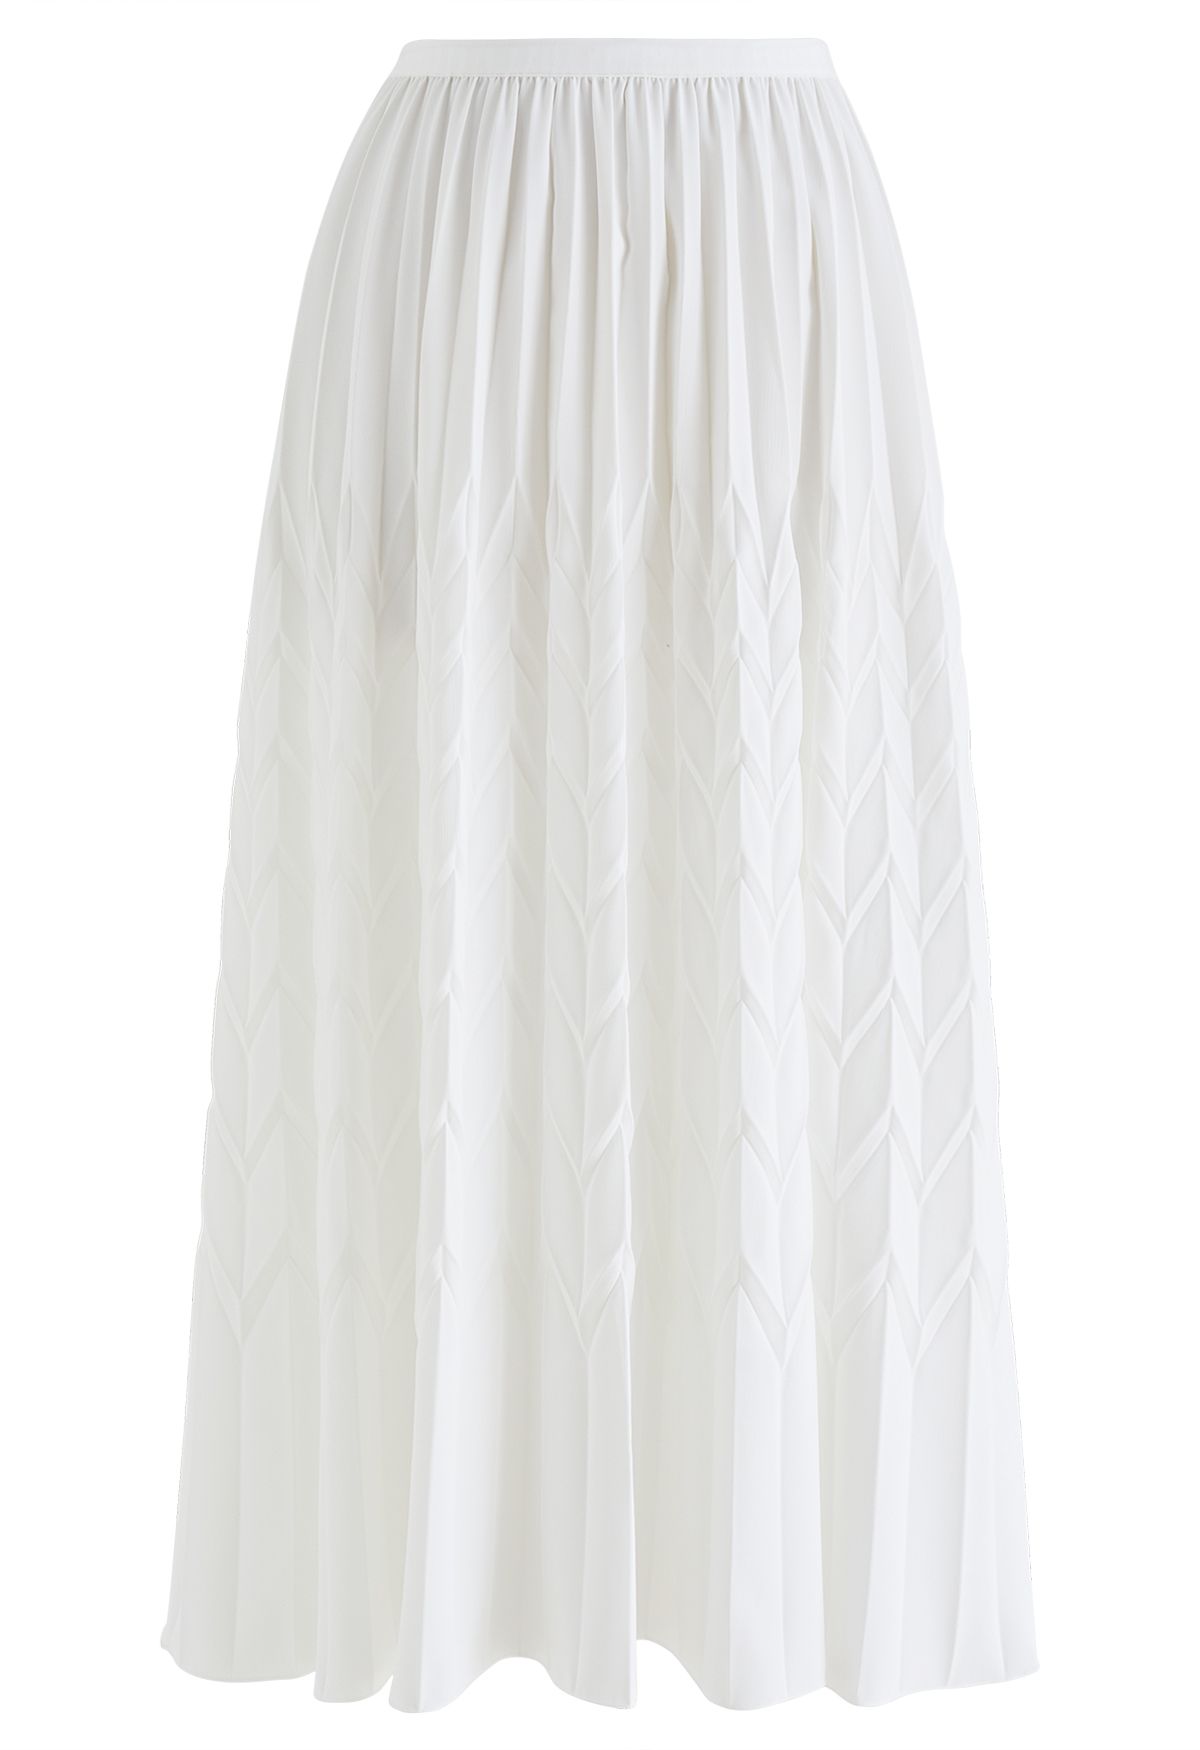 Zigzag Embossed Pleated Midi Skirt in White